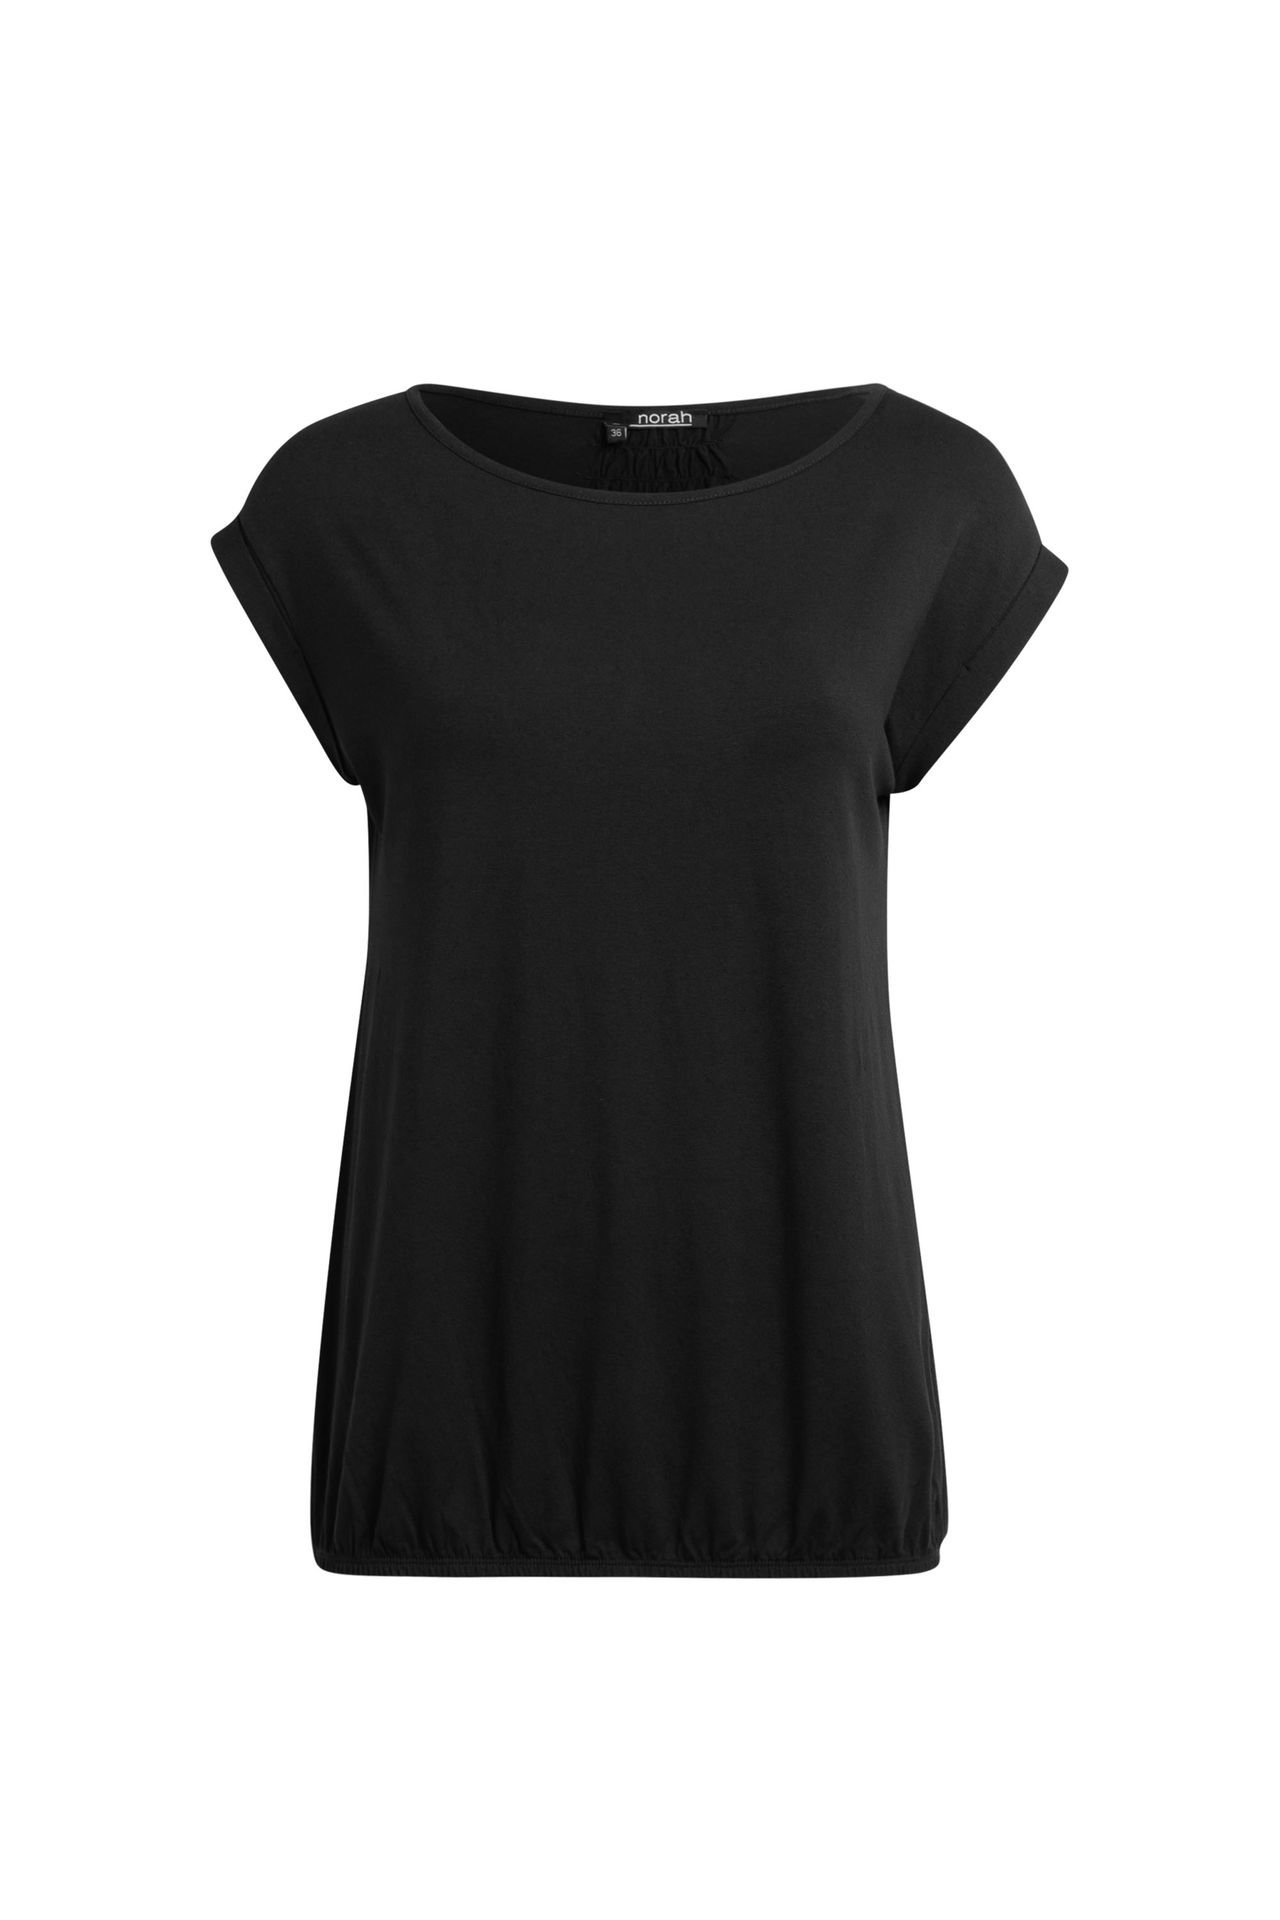 Norah Shirt Marije zwart black 203656-001